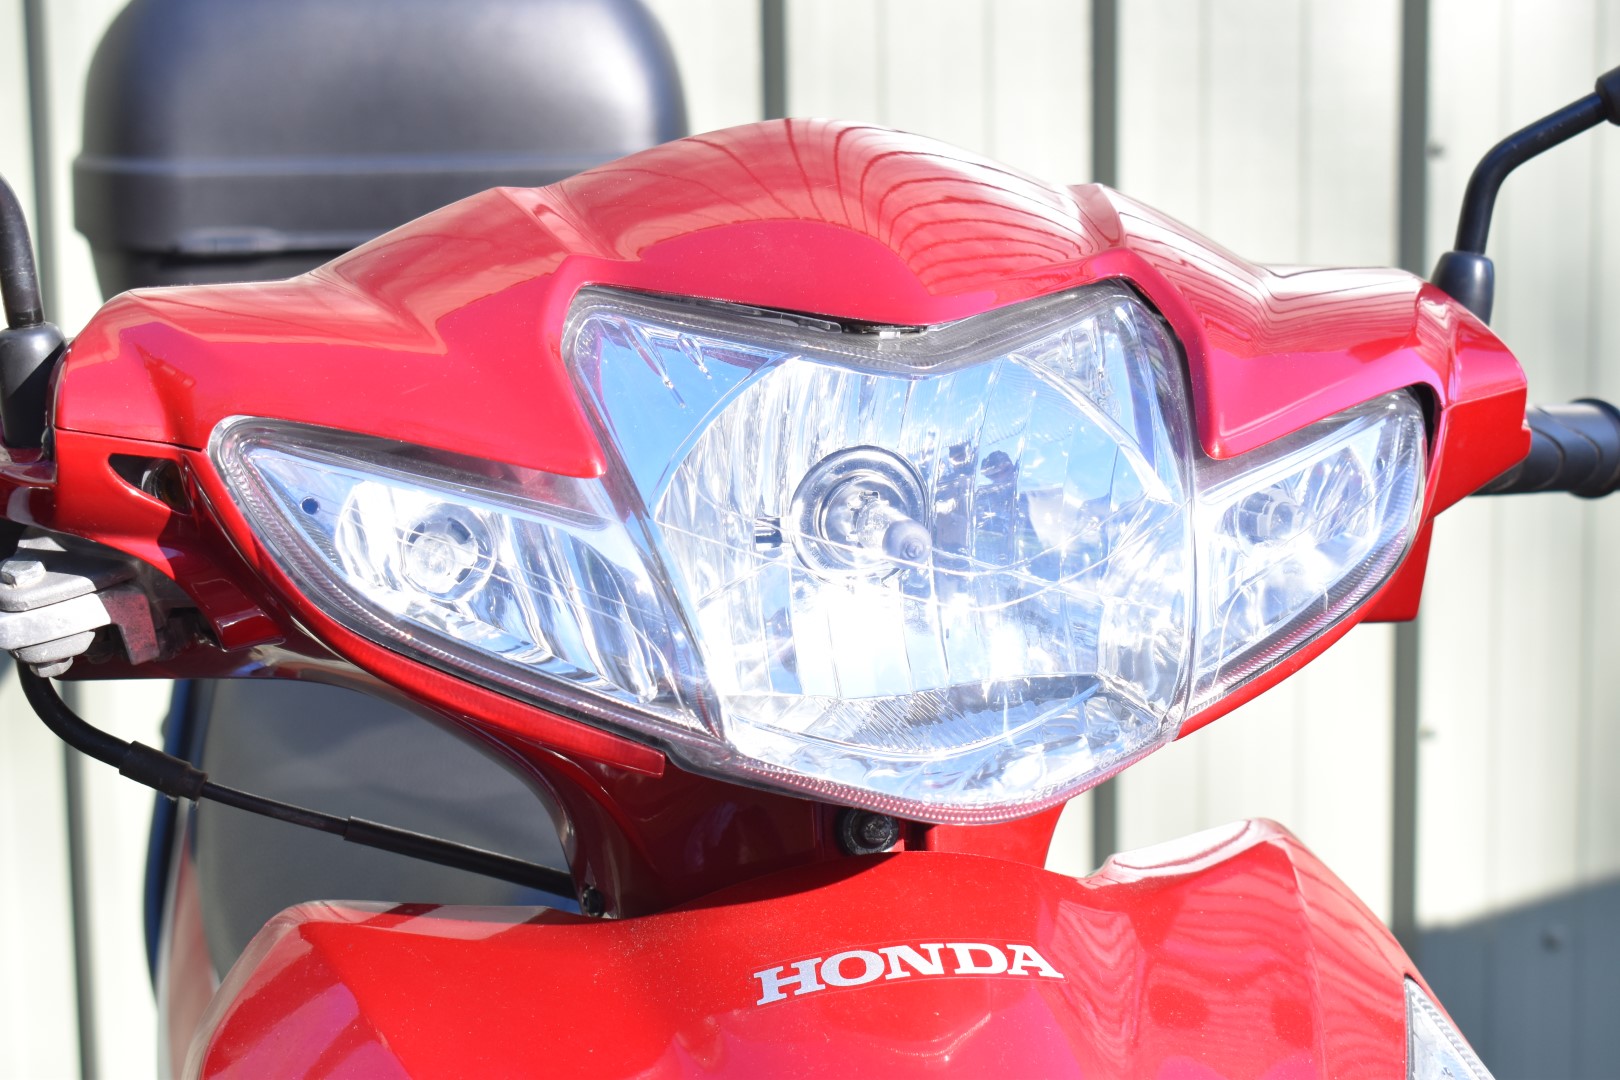 2014 Honda Wave four stroke 109cc motorcycle or scooter model AFS 110 2SHC, registration number CF63 - Image 4 of 17